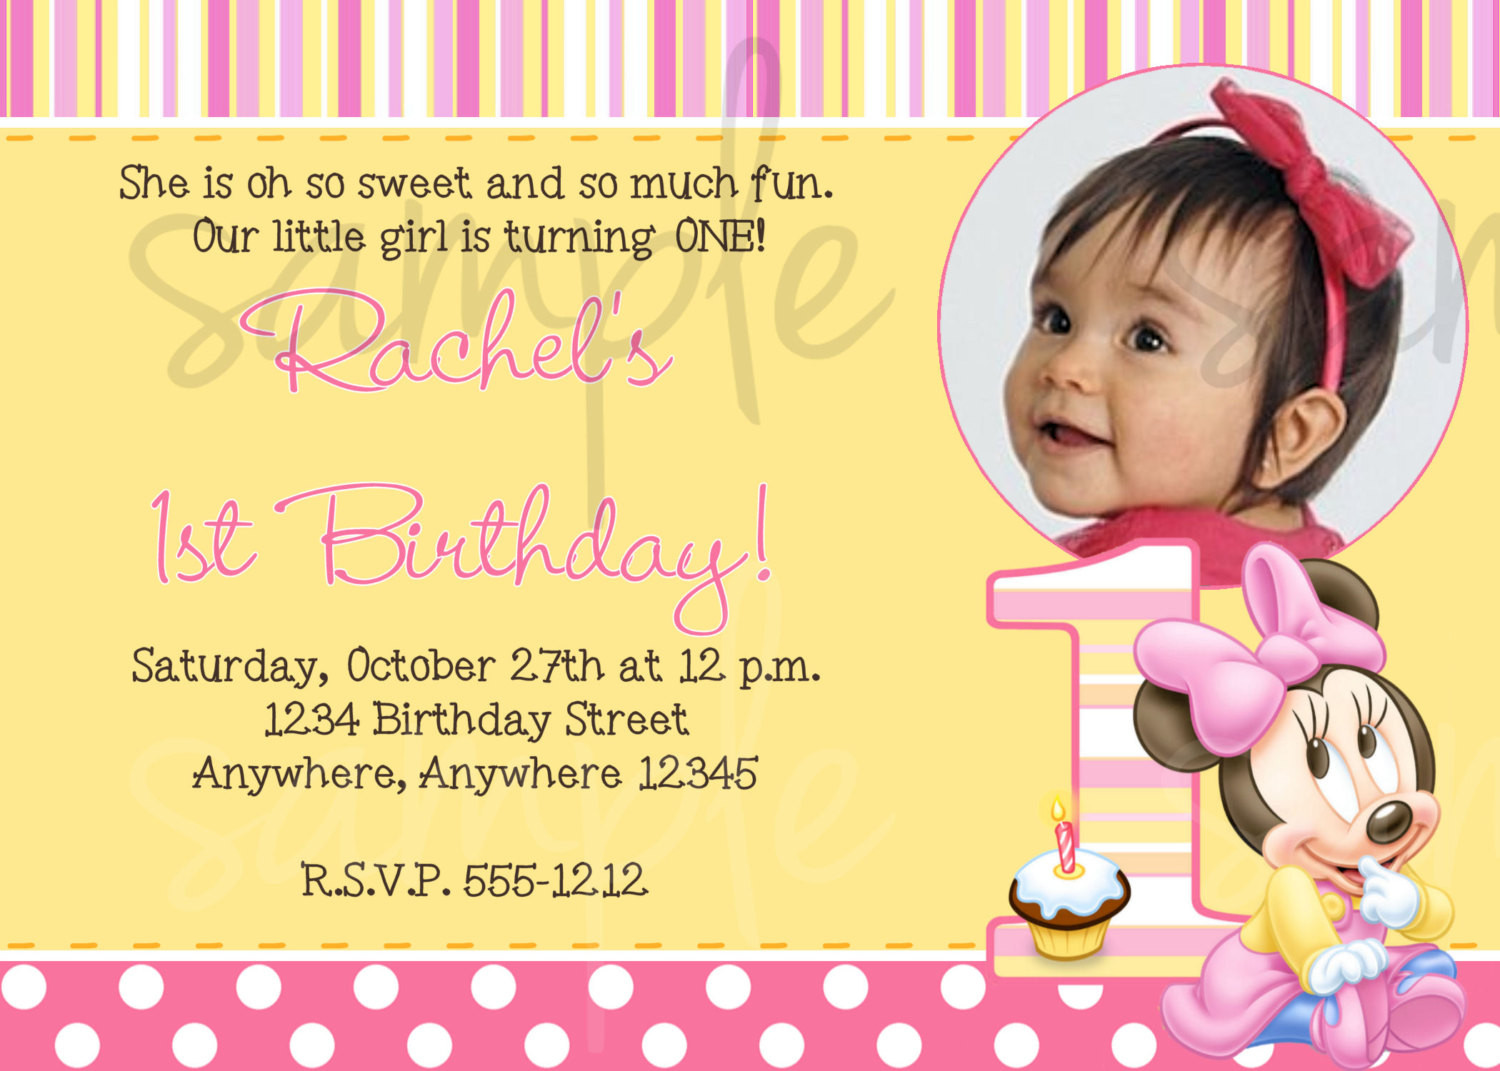 1st Birthday Party Invitation Wording
 Minnie Mouse 1st Birthday Invitation